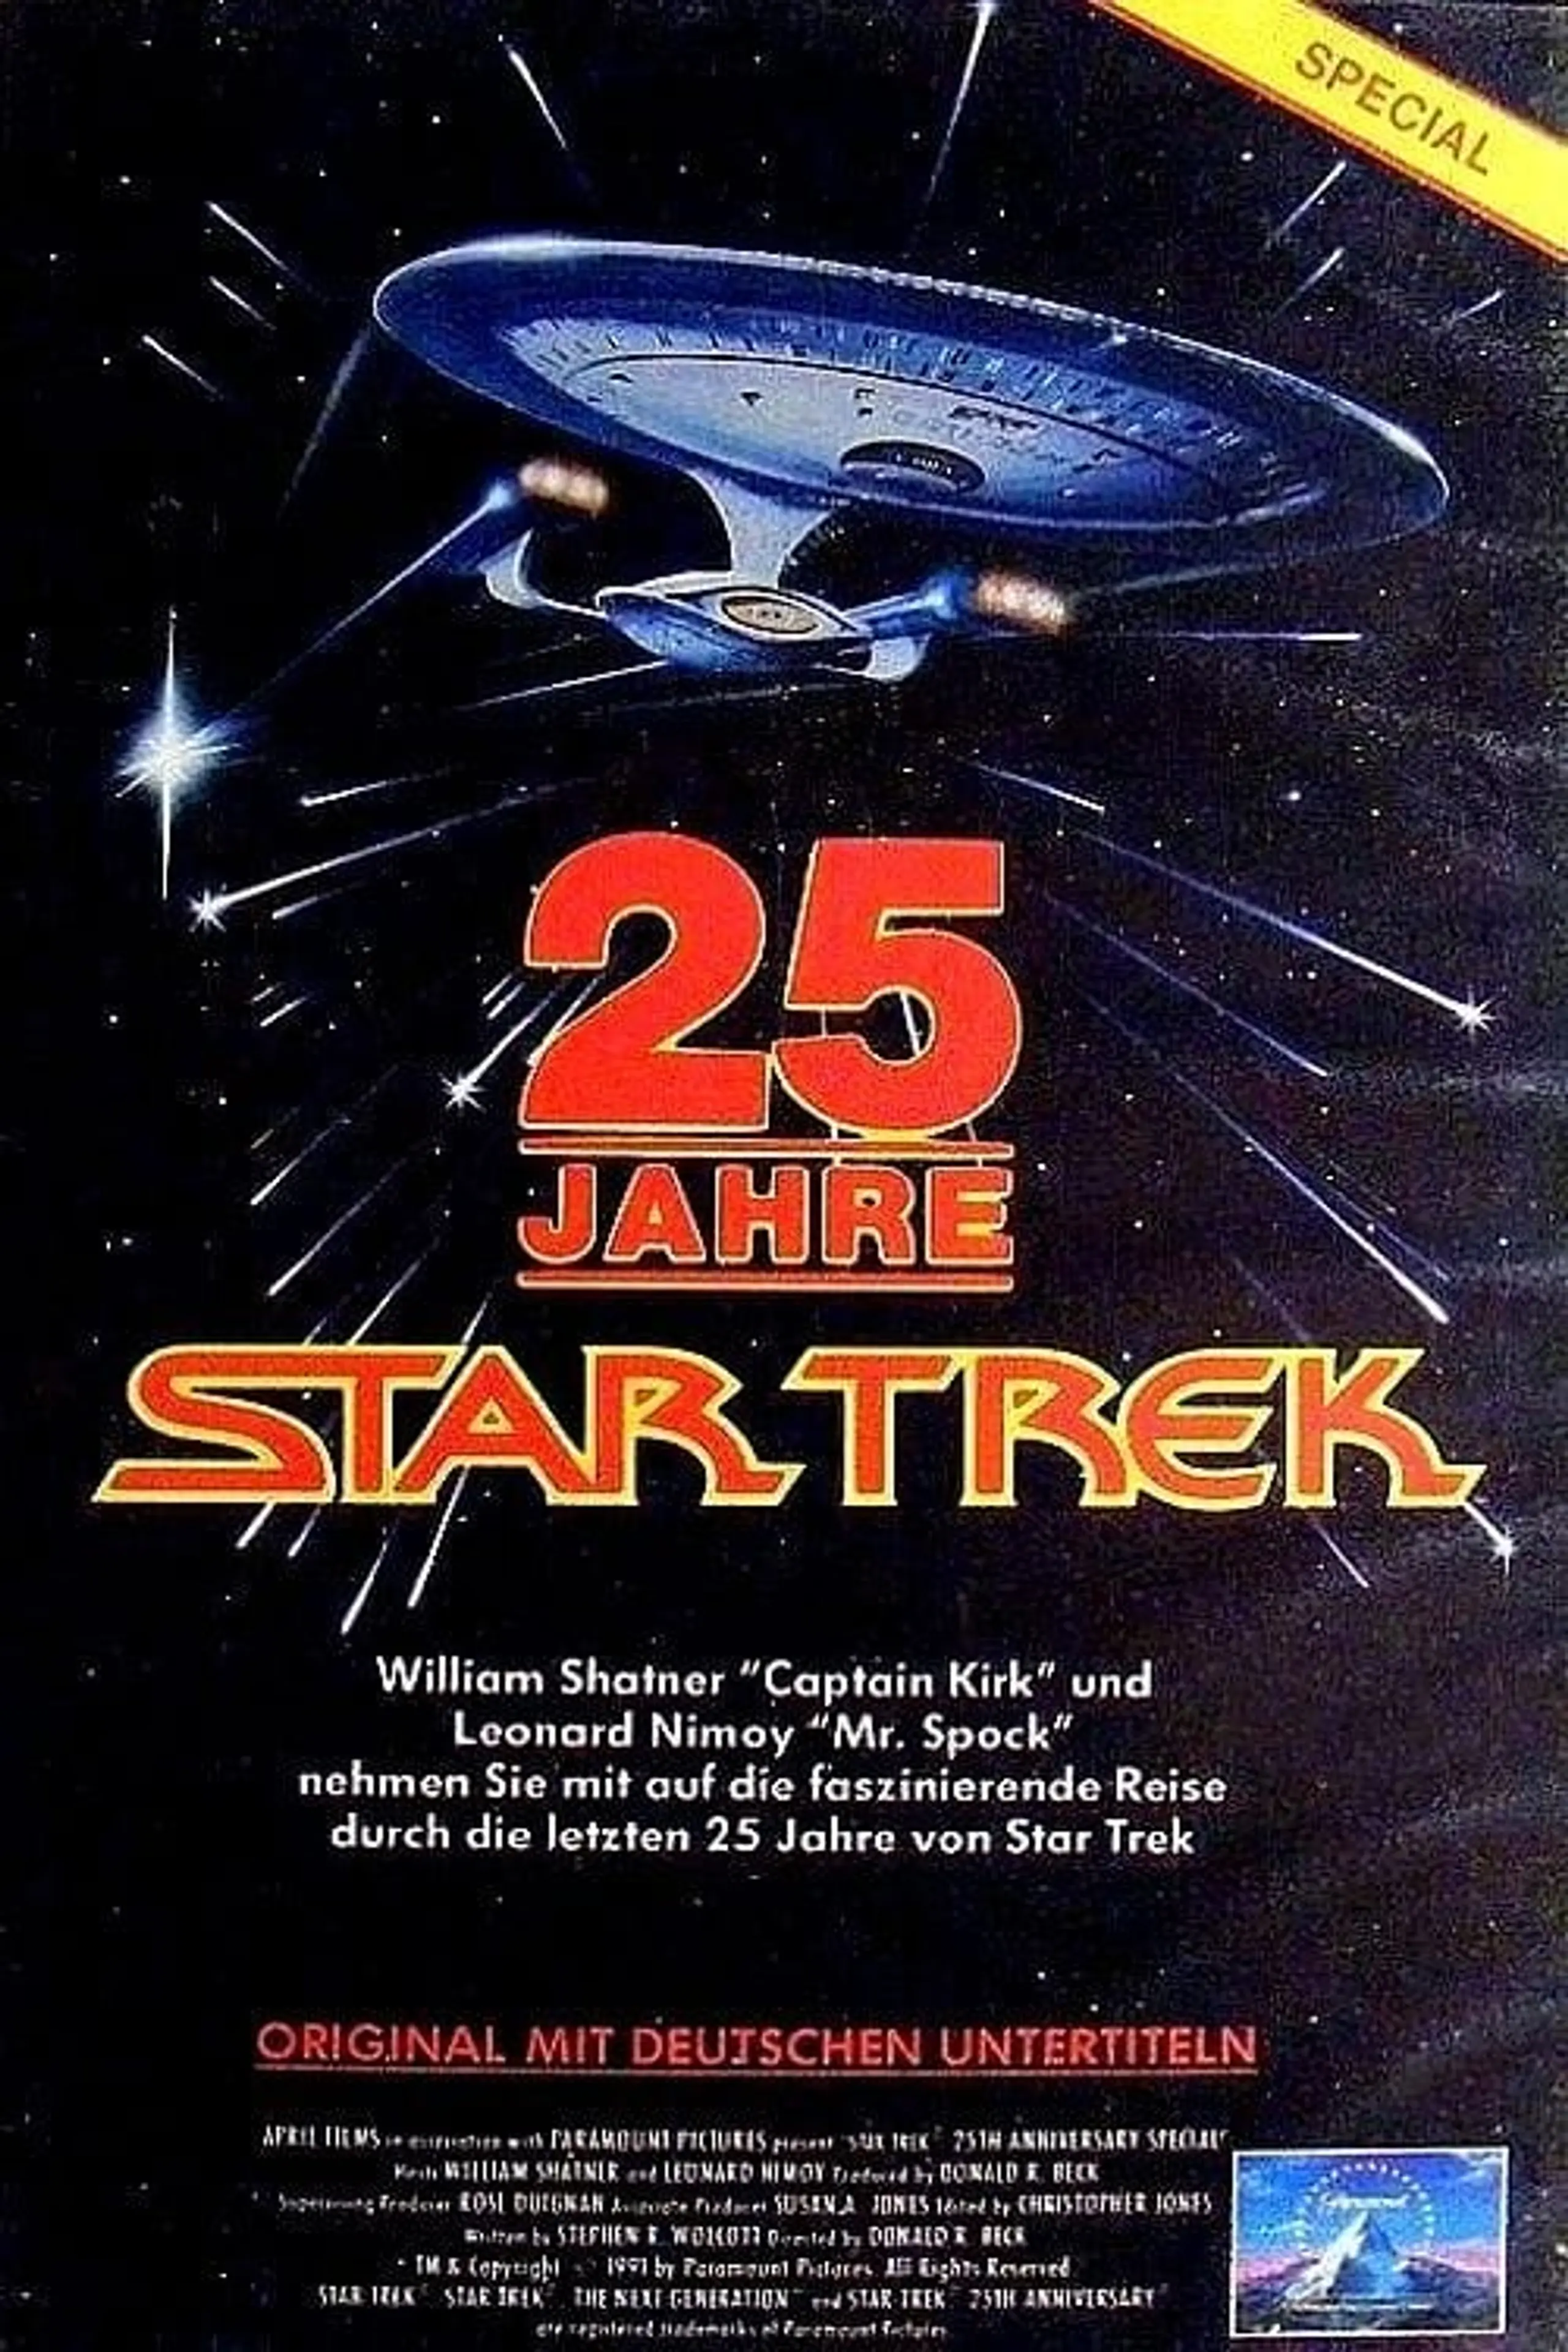 Star Trek: 25th Anniversary Special